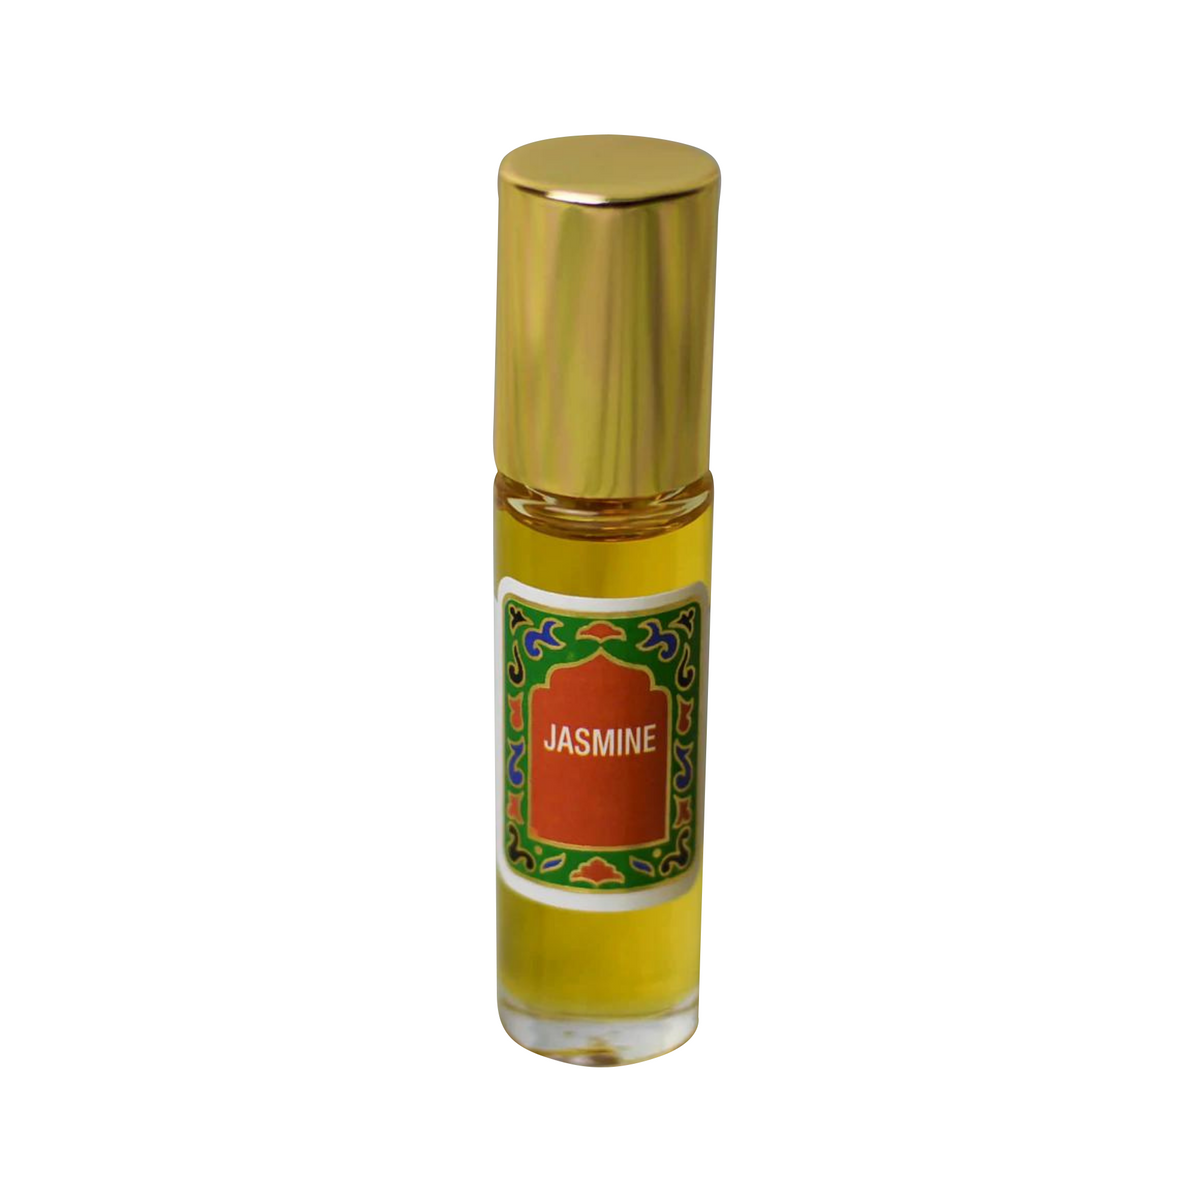 Primary image of Jasmine Fragrance Roll-On